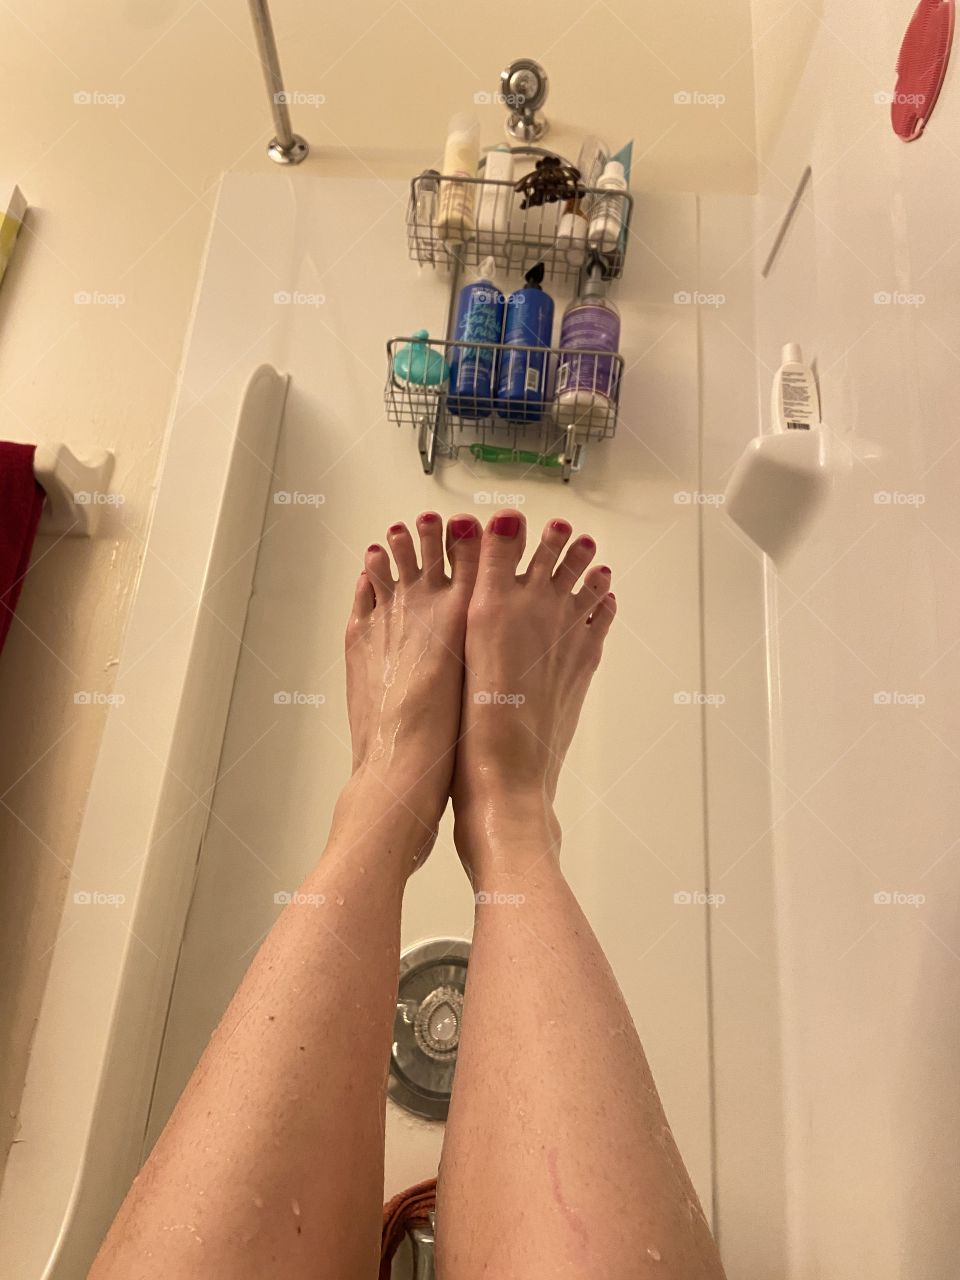 Feet in the tub